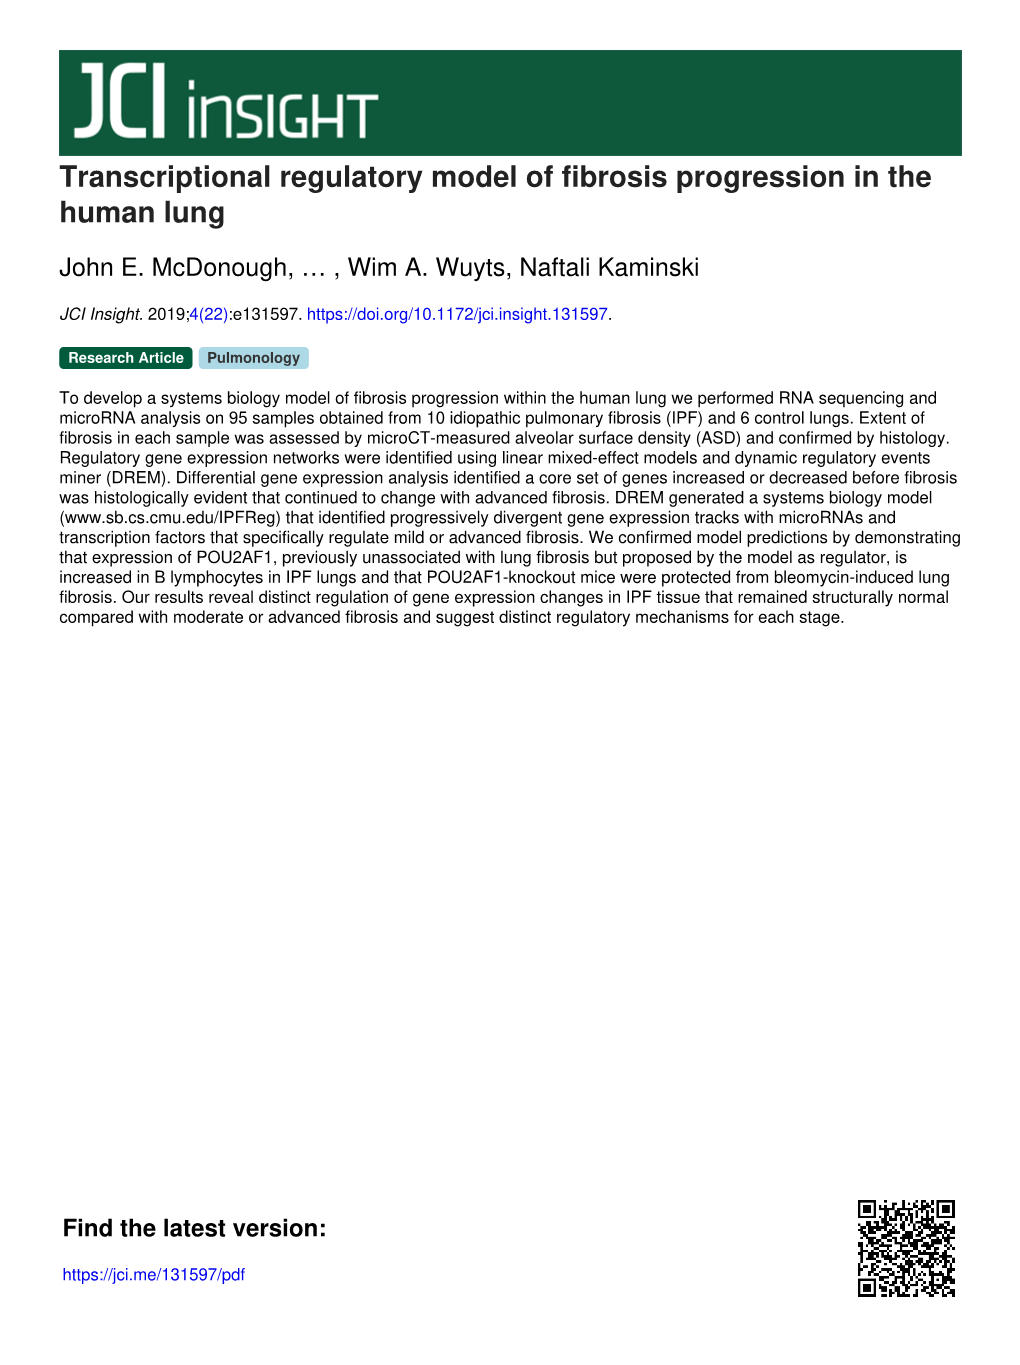 Transcriptional Regulatory Model of Fibrosis Progression in the Human Lung